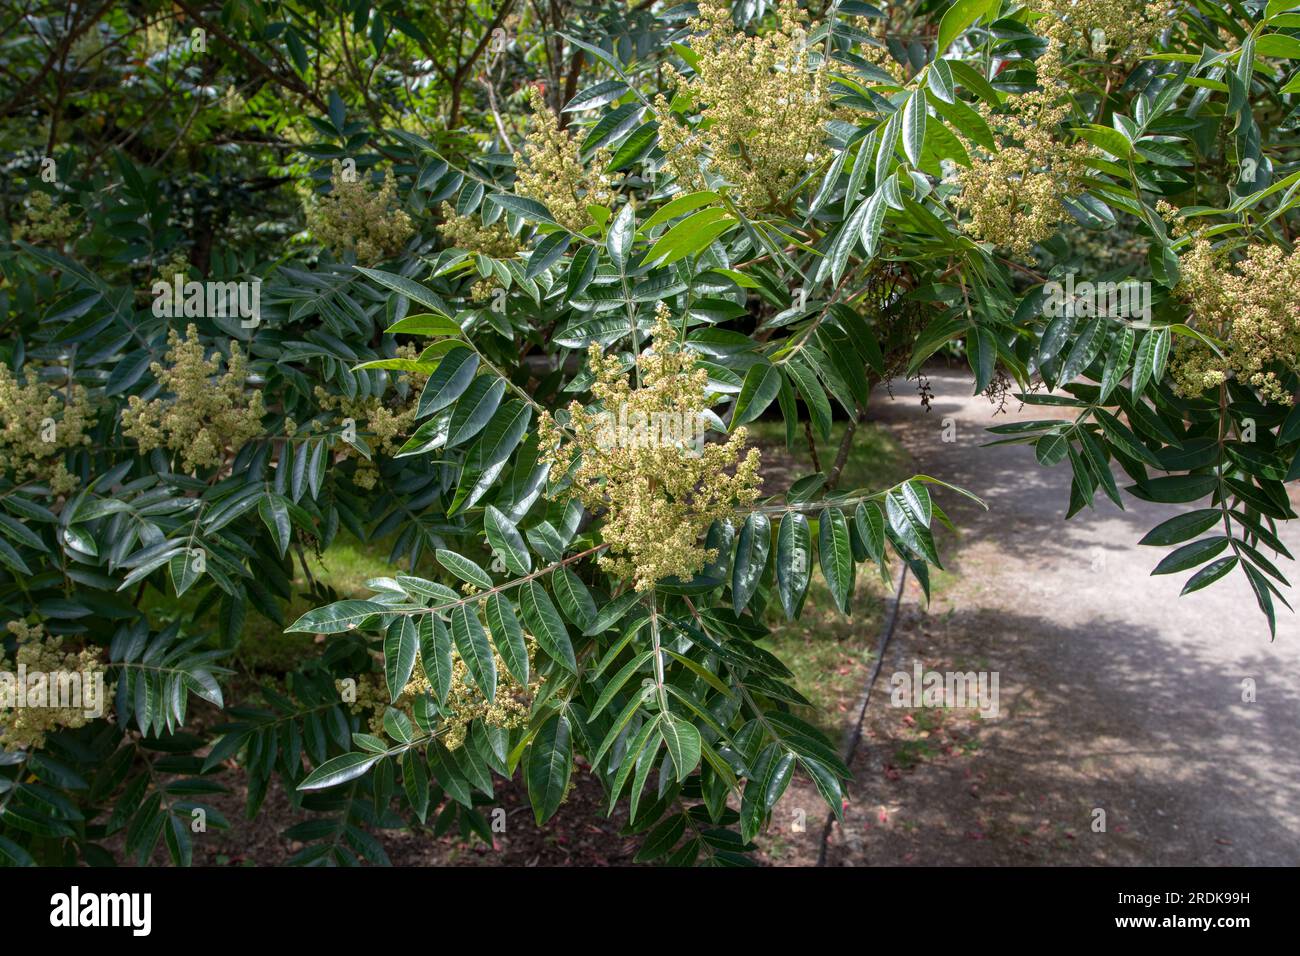 Rhus copallinum or shining sumac tree with white flowers and lush green foliage Stock Photo